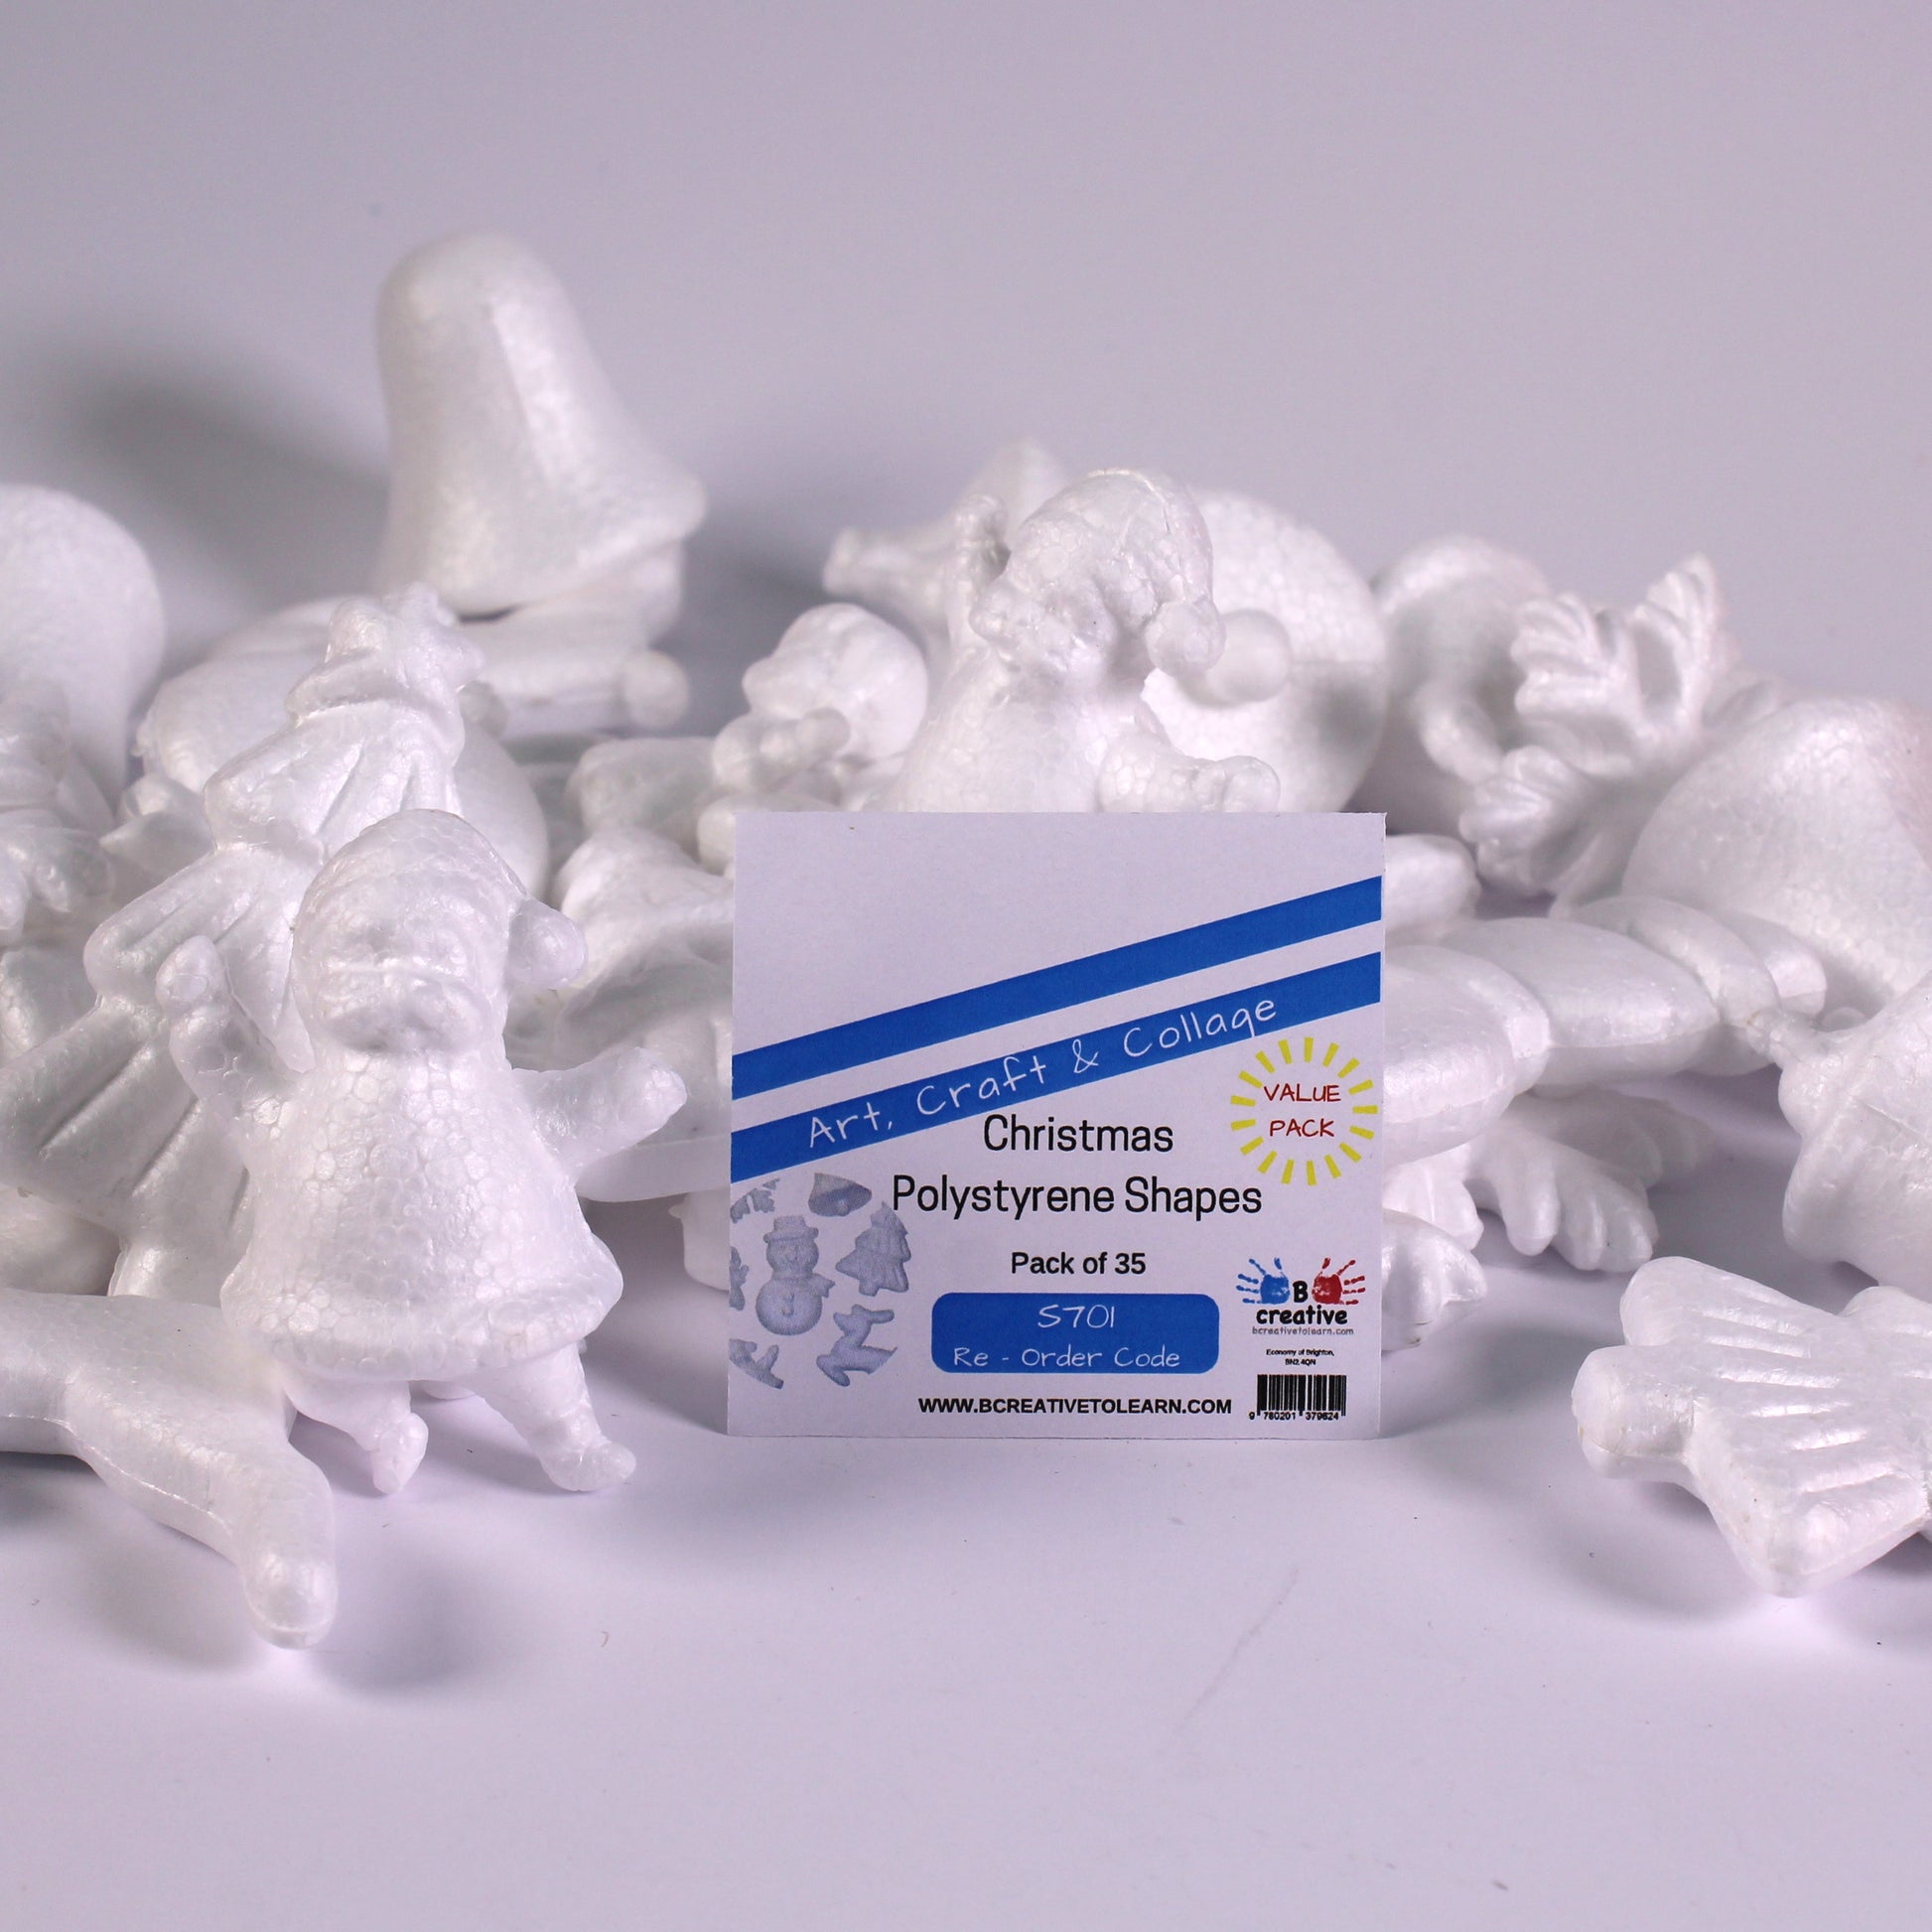 Polystyrene Shapes UK, Styrofoam Shapes for Crafts